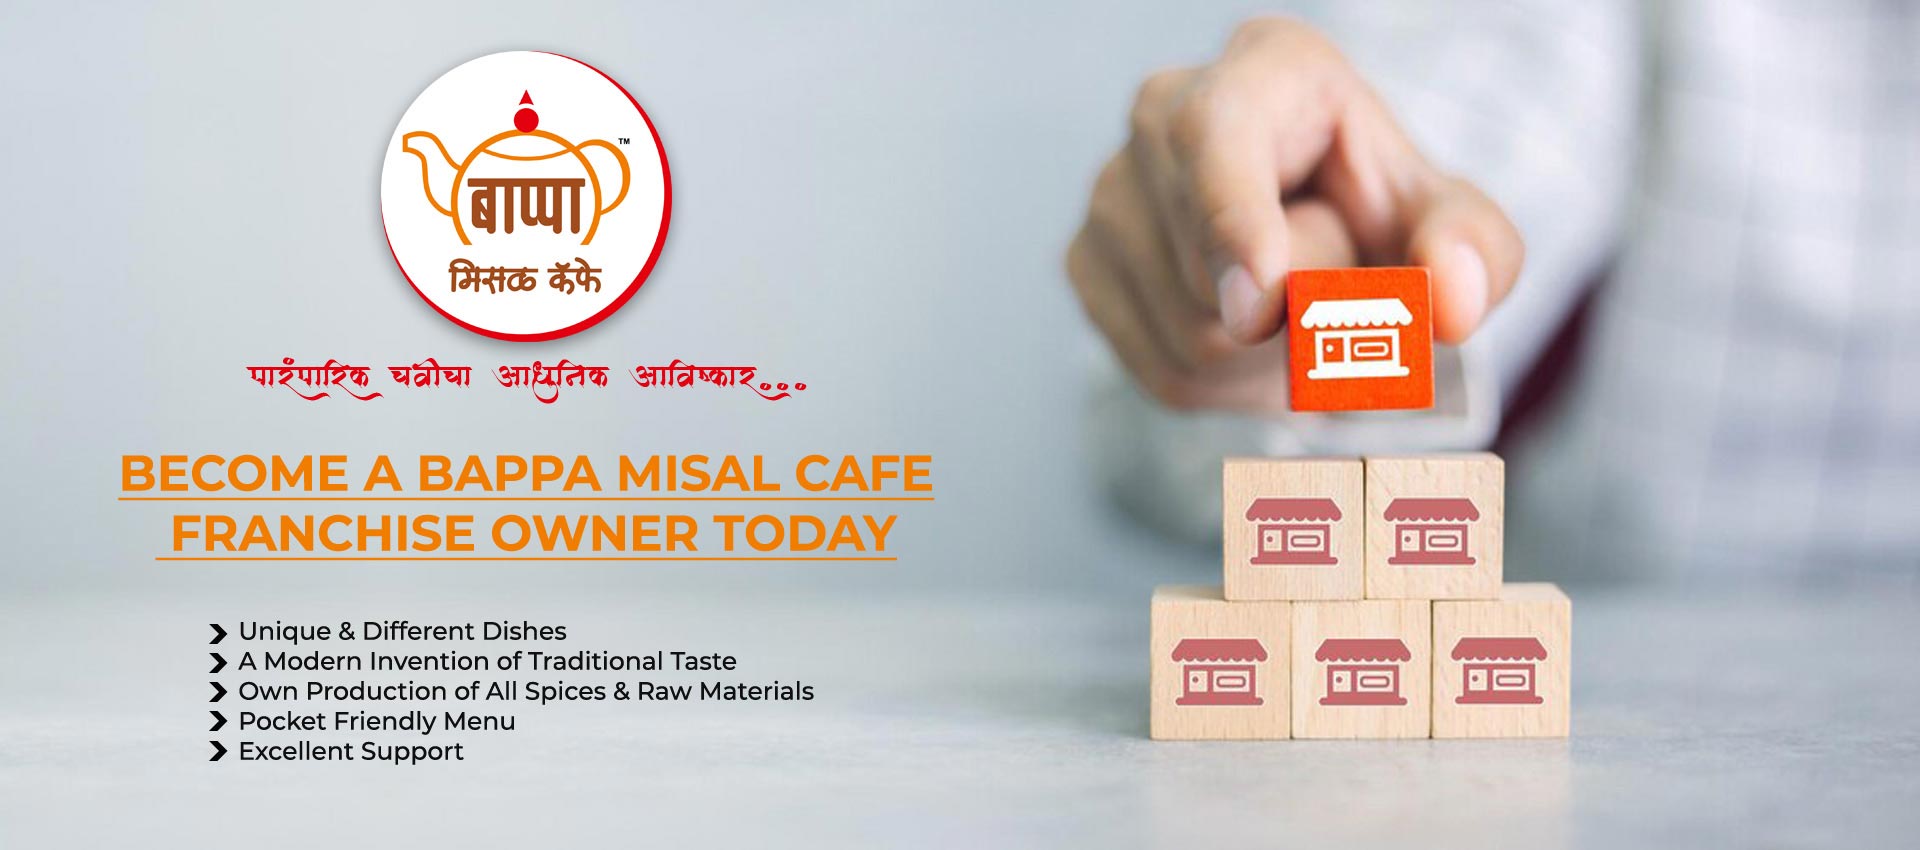 Bappa Misal Franchise Opportunity, Franchise Opportunity, Misal Franchise, Best Franchise opportunity in Maharashtra